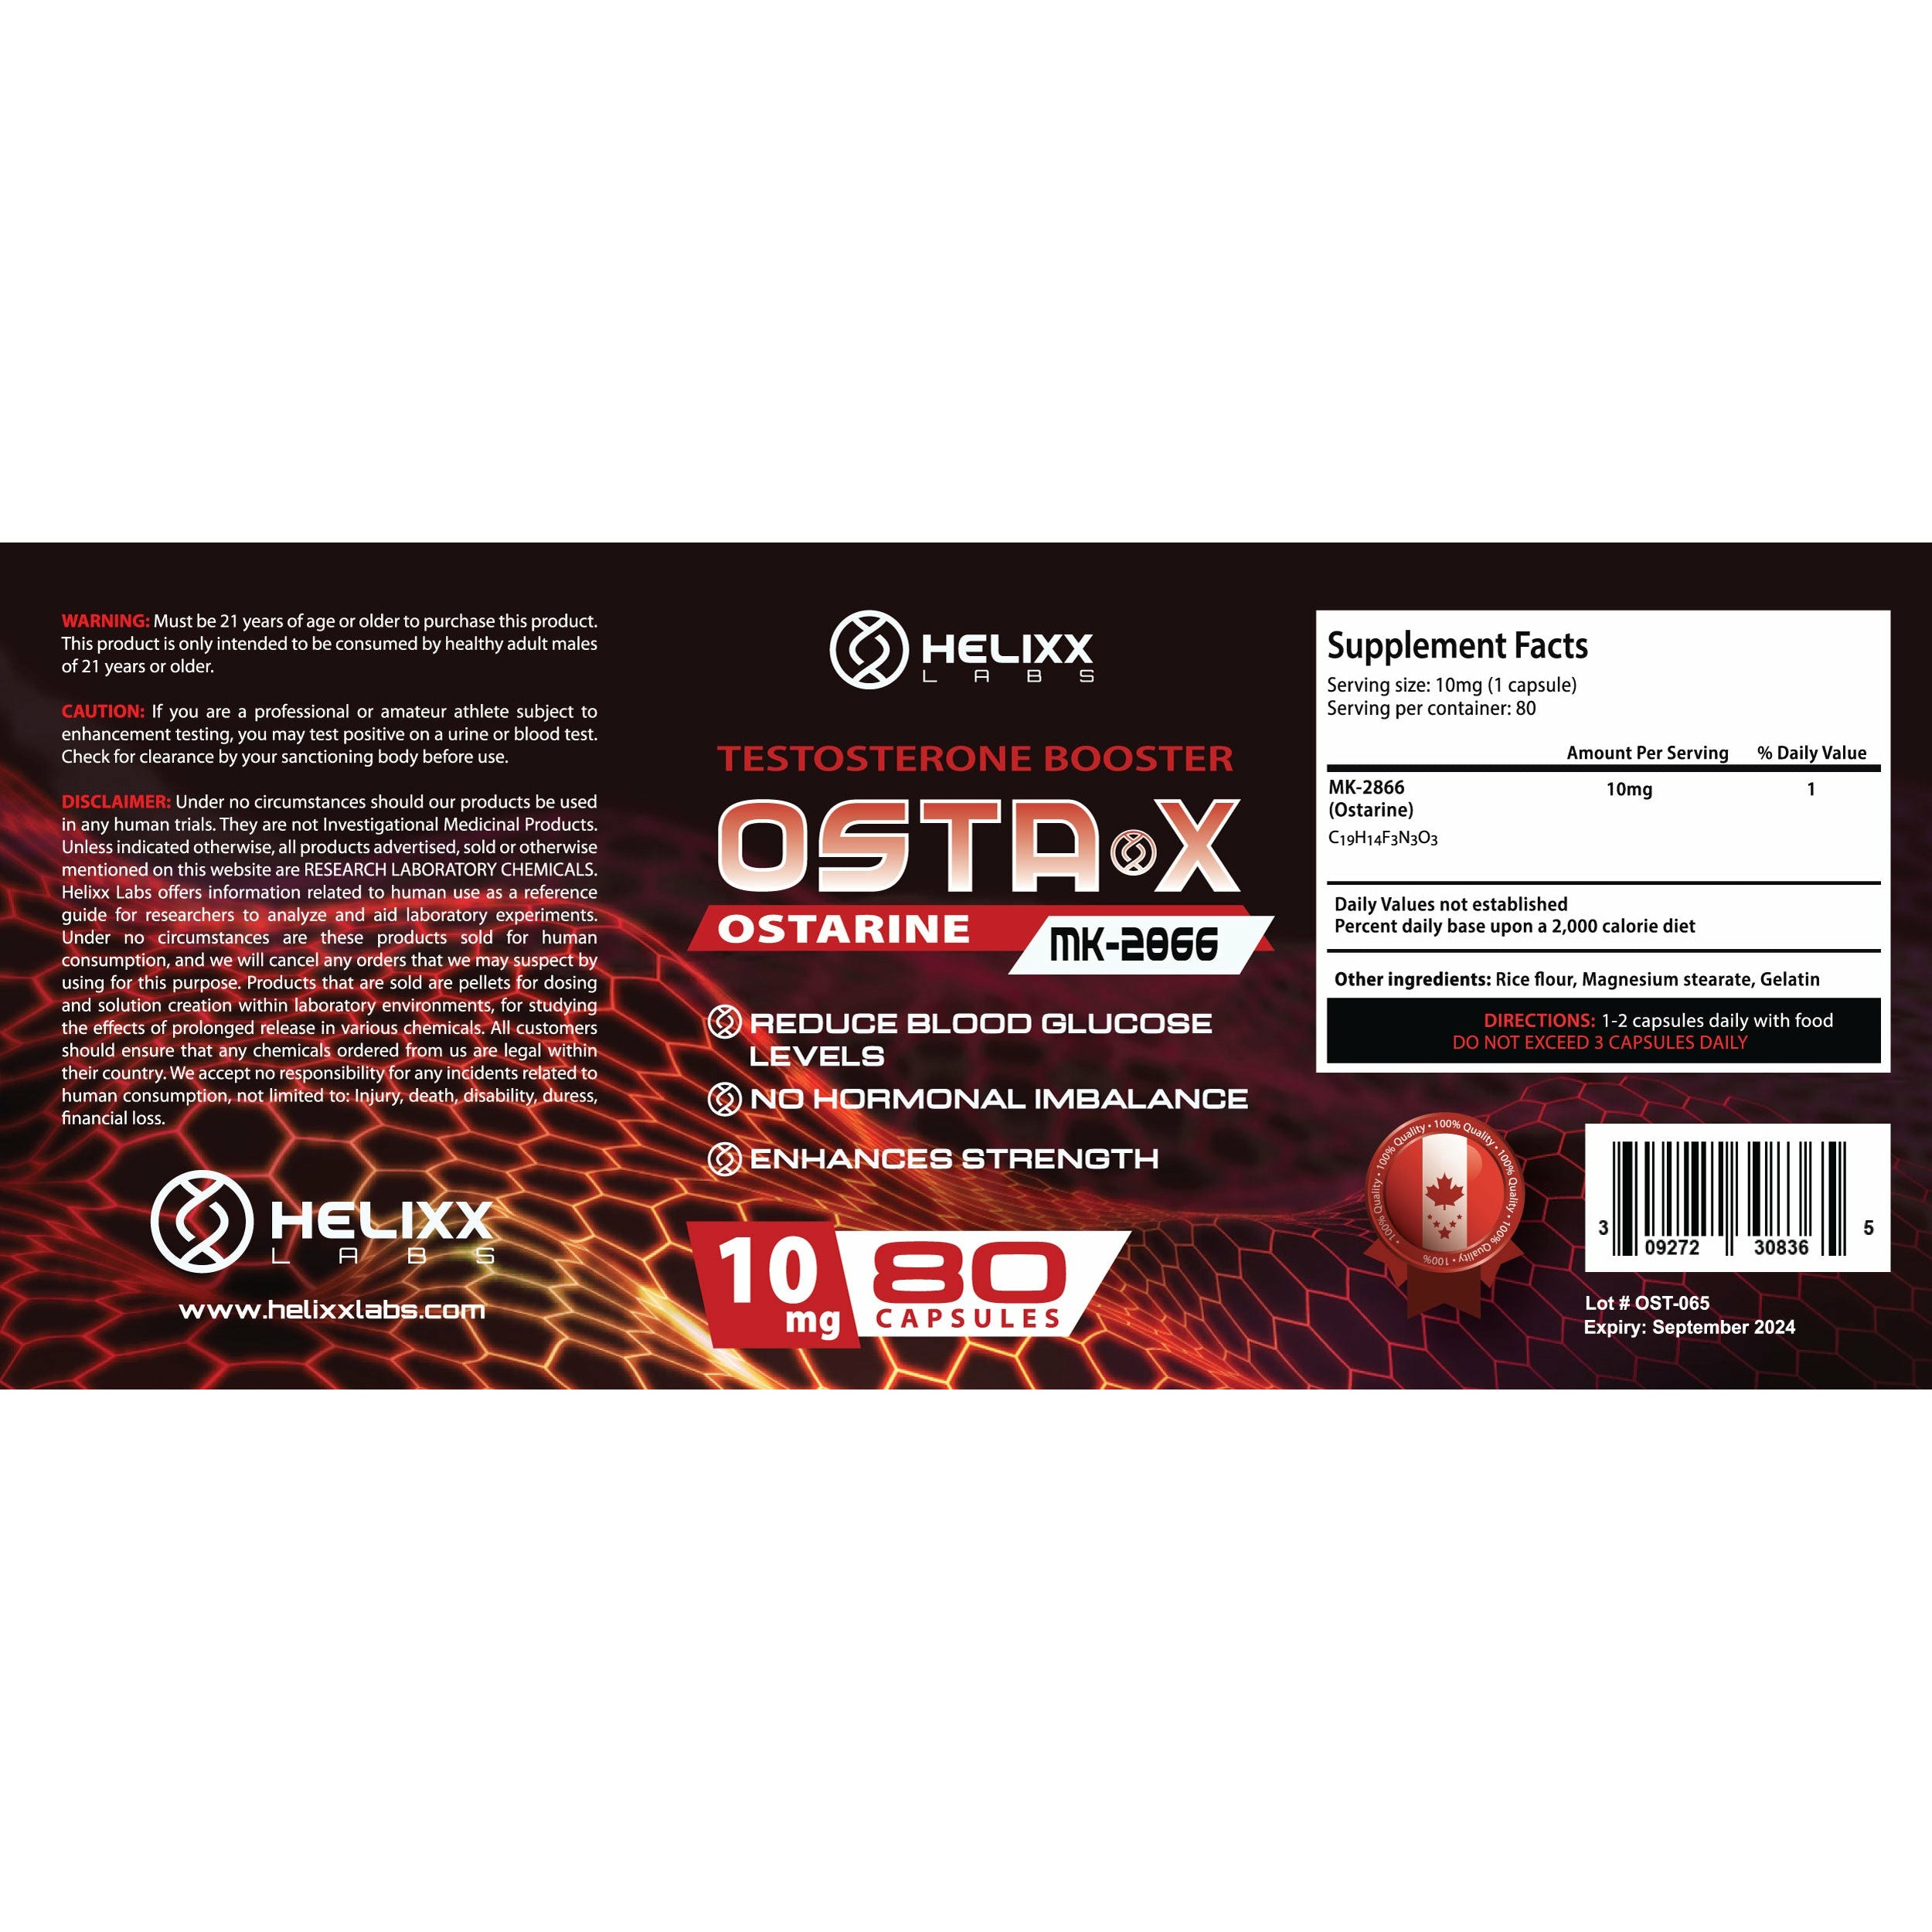 Helixx OSTA X (10mg – 80 capsules) Vitamins & Supplements Helixx helixx-osta-x-10mg-80-capsules